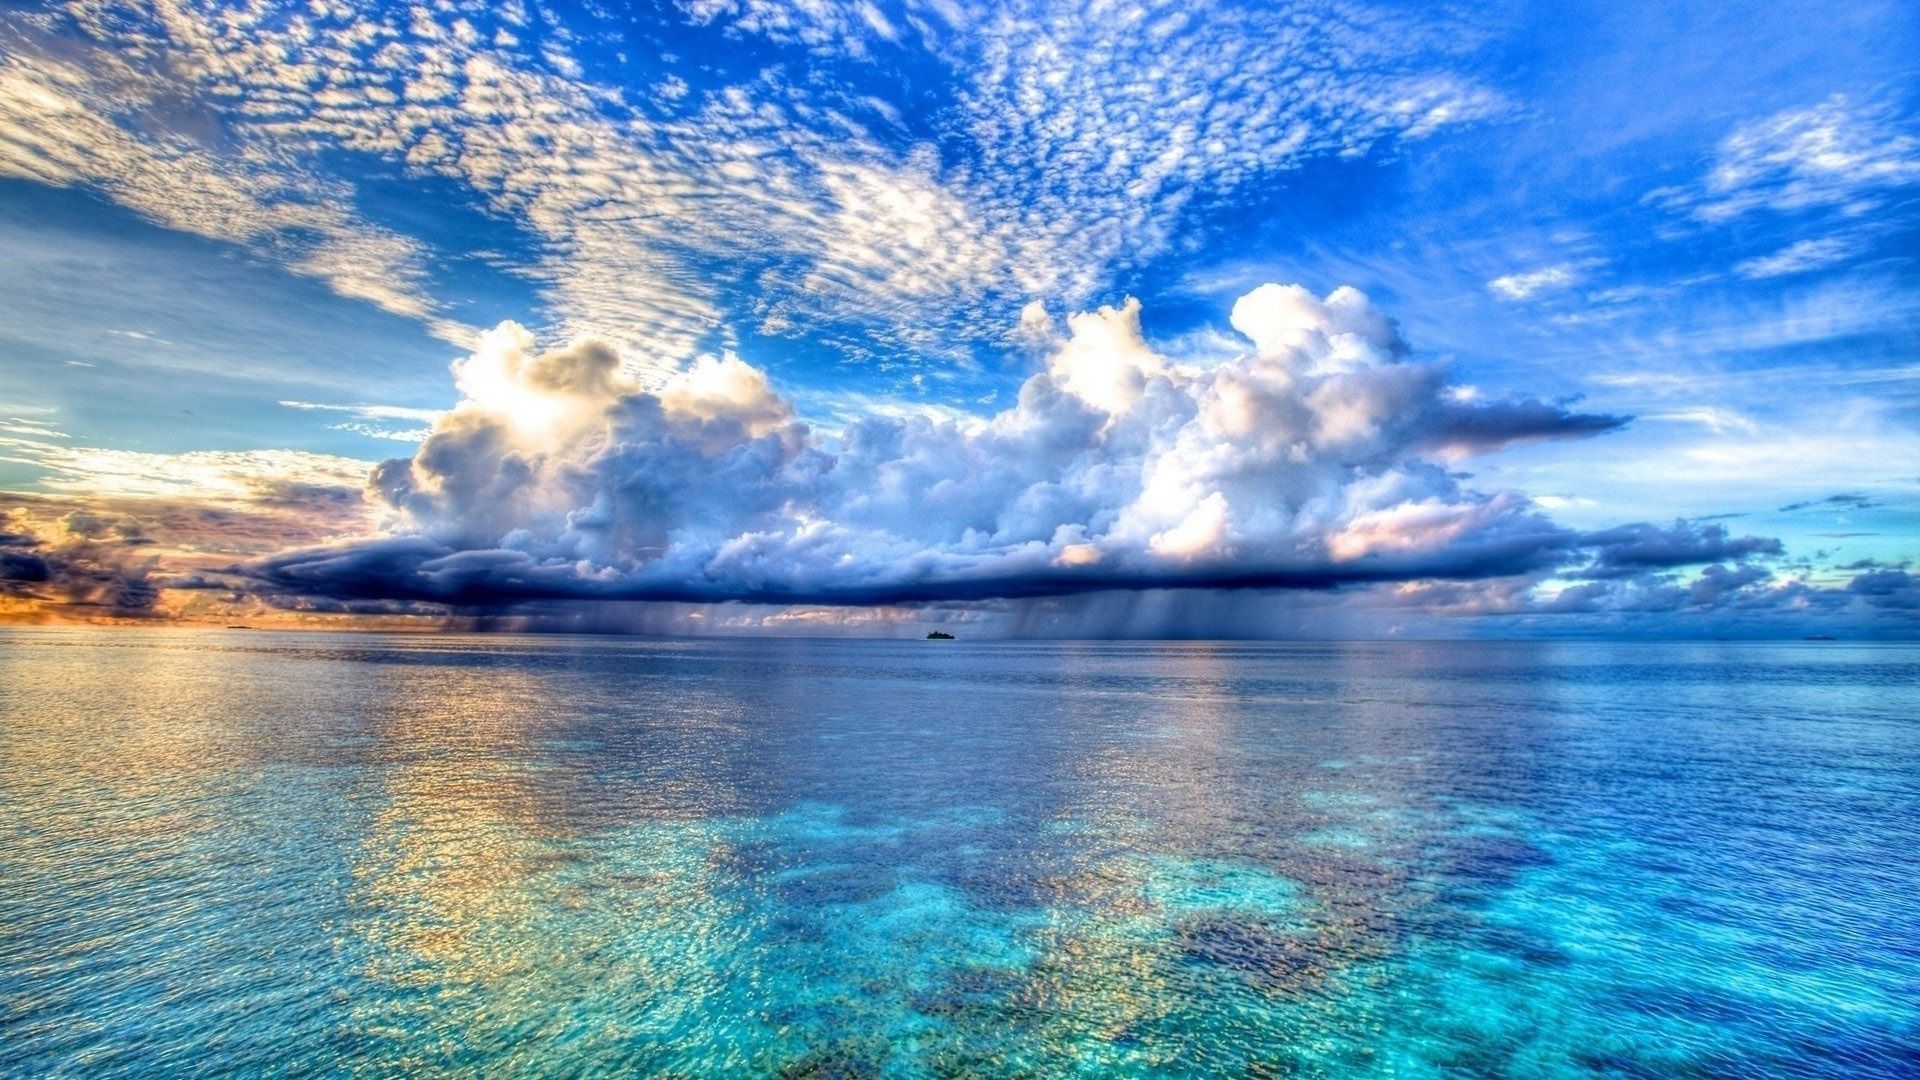 دانلود عکس ساحل دریا جامائیکا با کیفیت Full HD